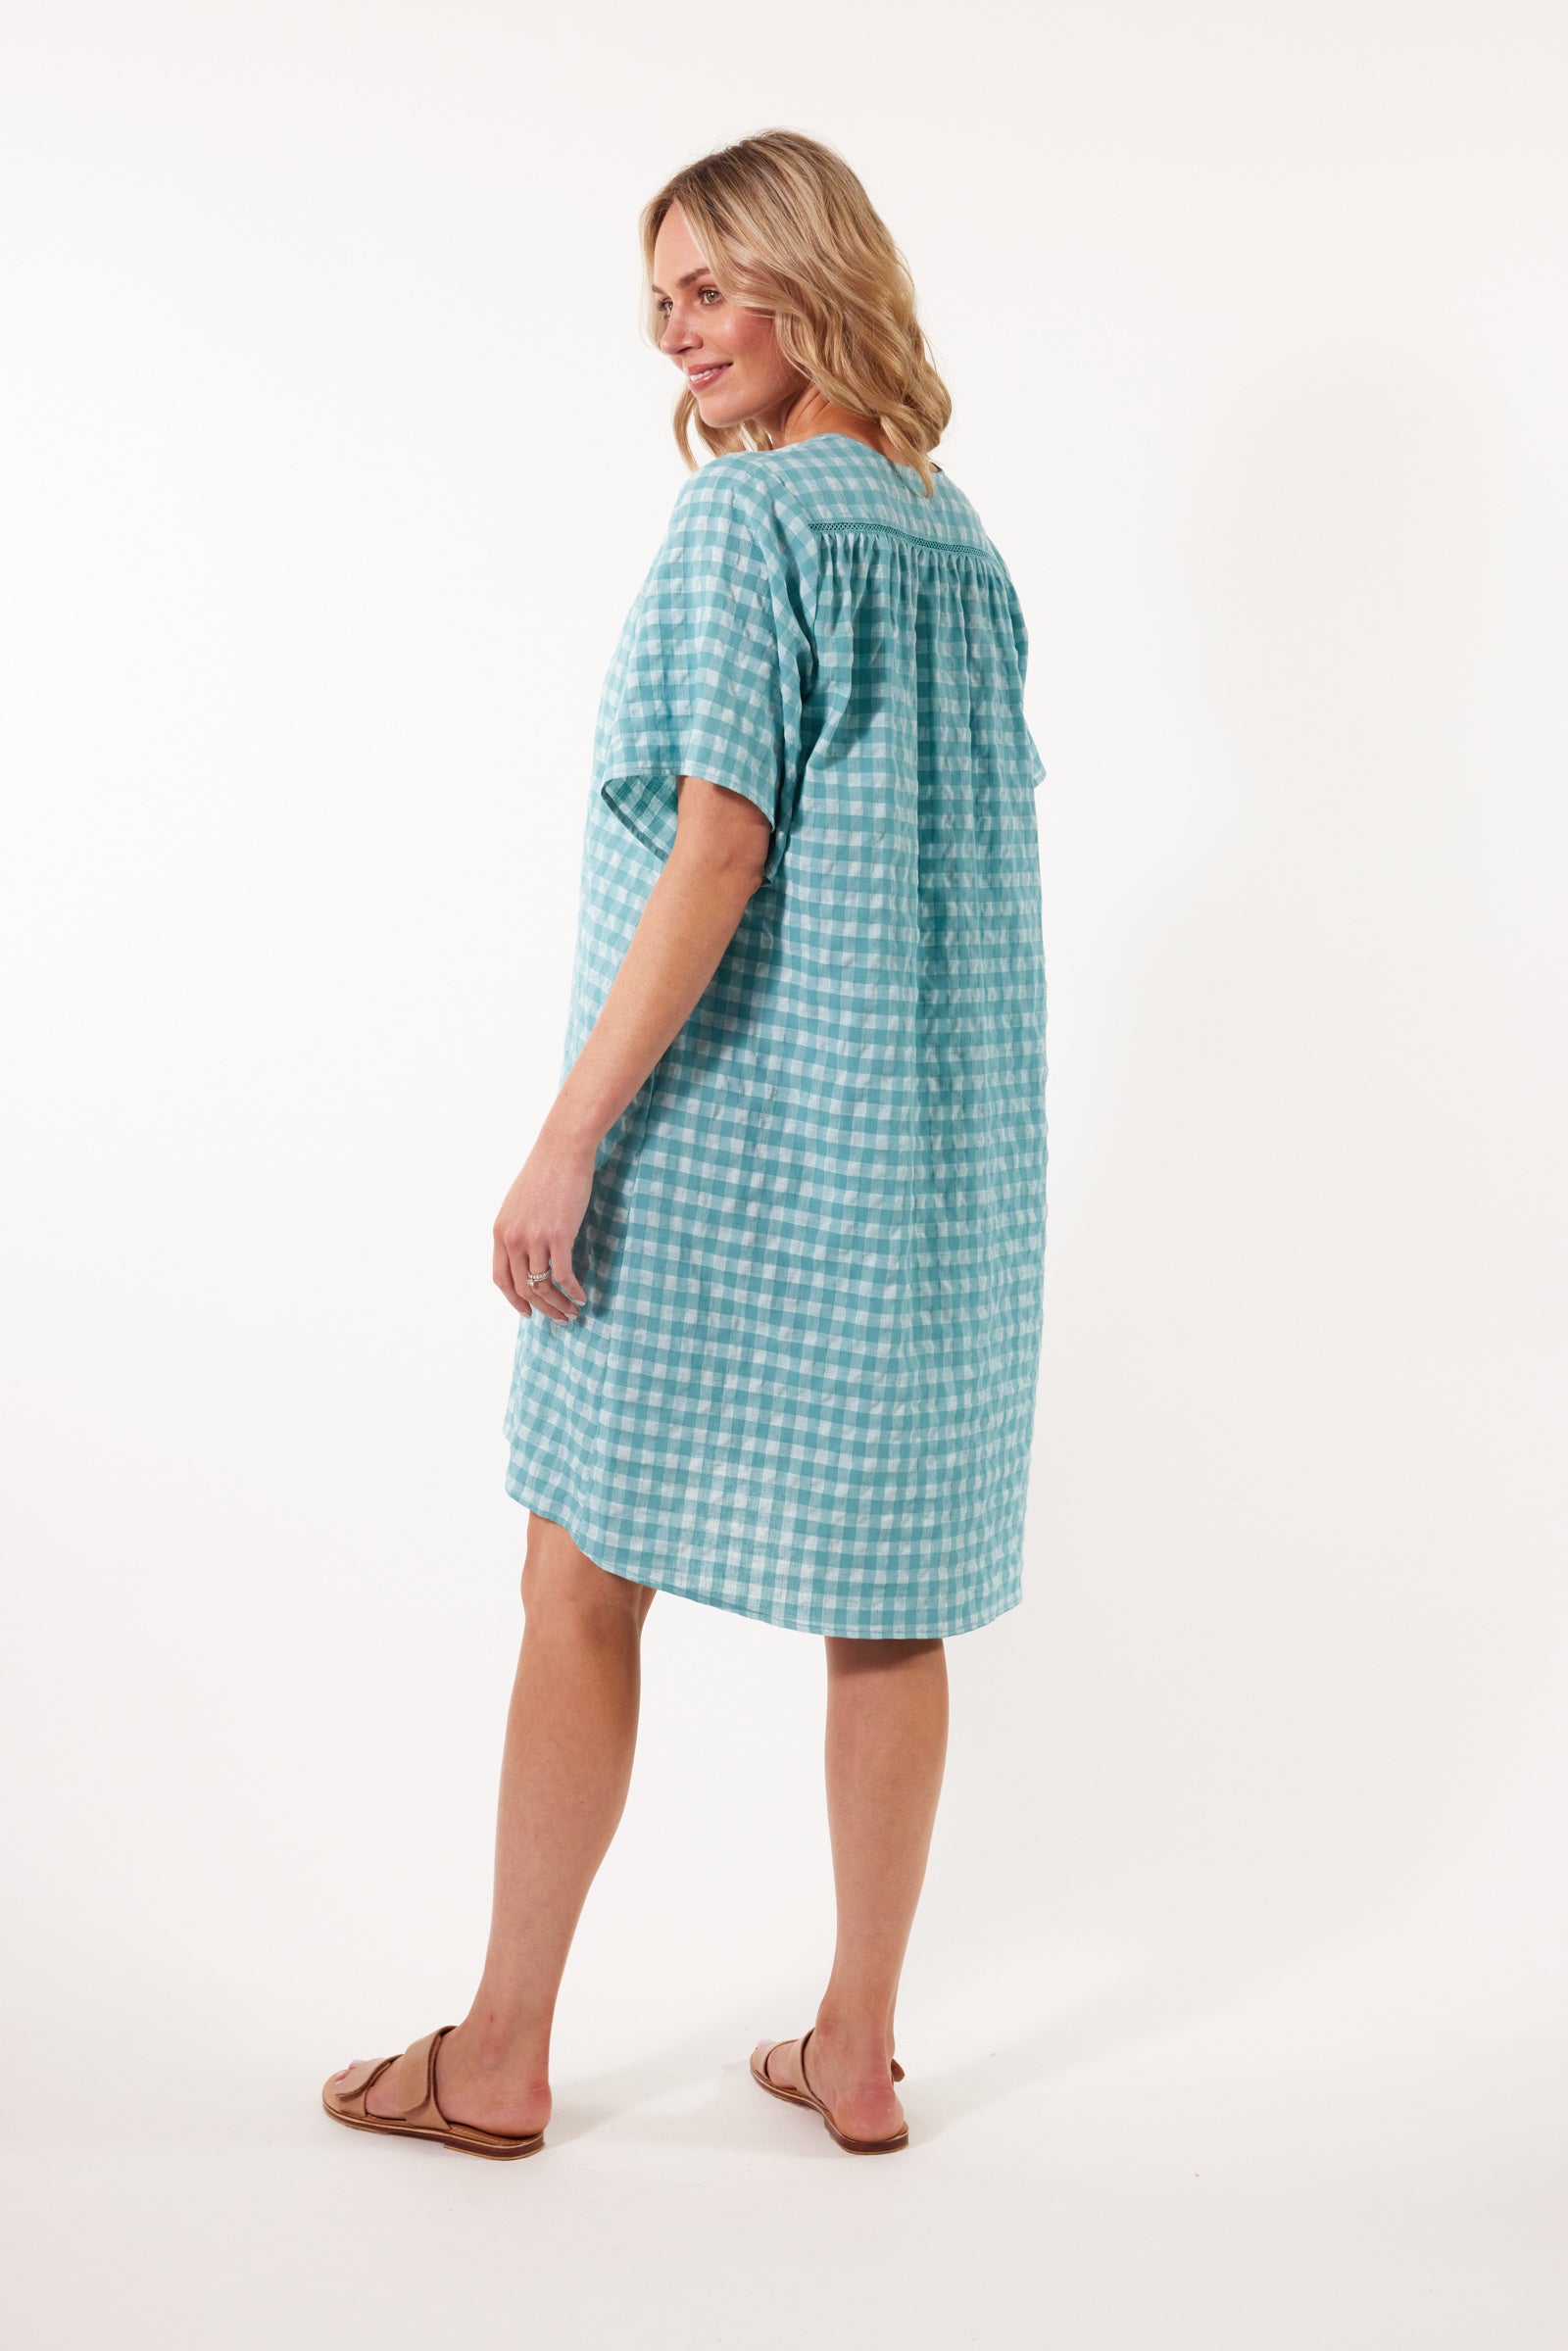 Alfresco Dress - Haze - Isle of Mine Clothing - Dress Mini Linen One Size